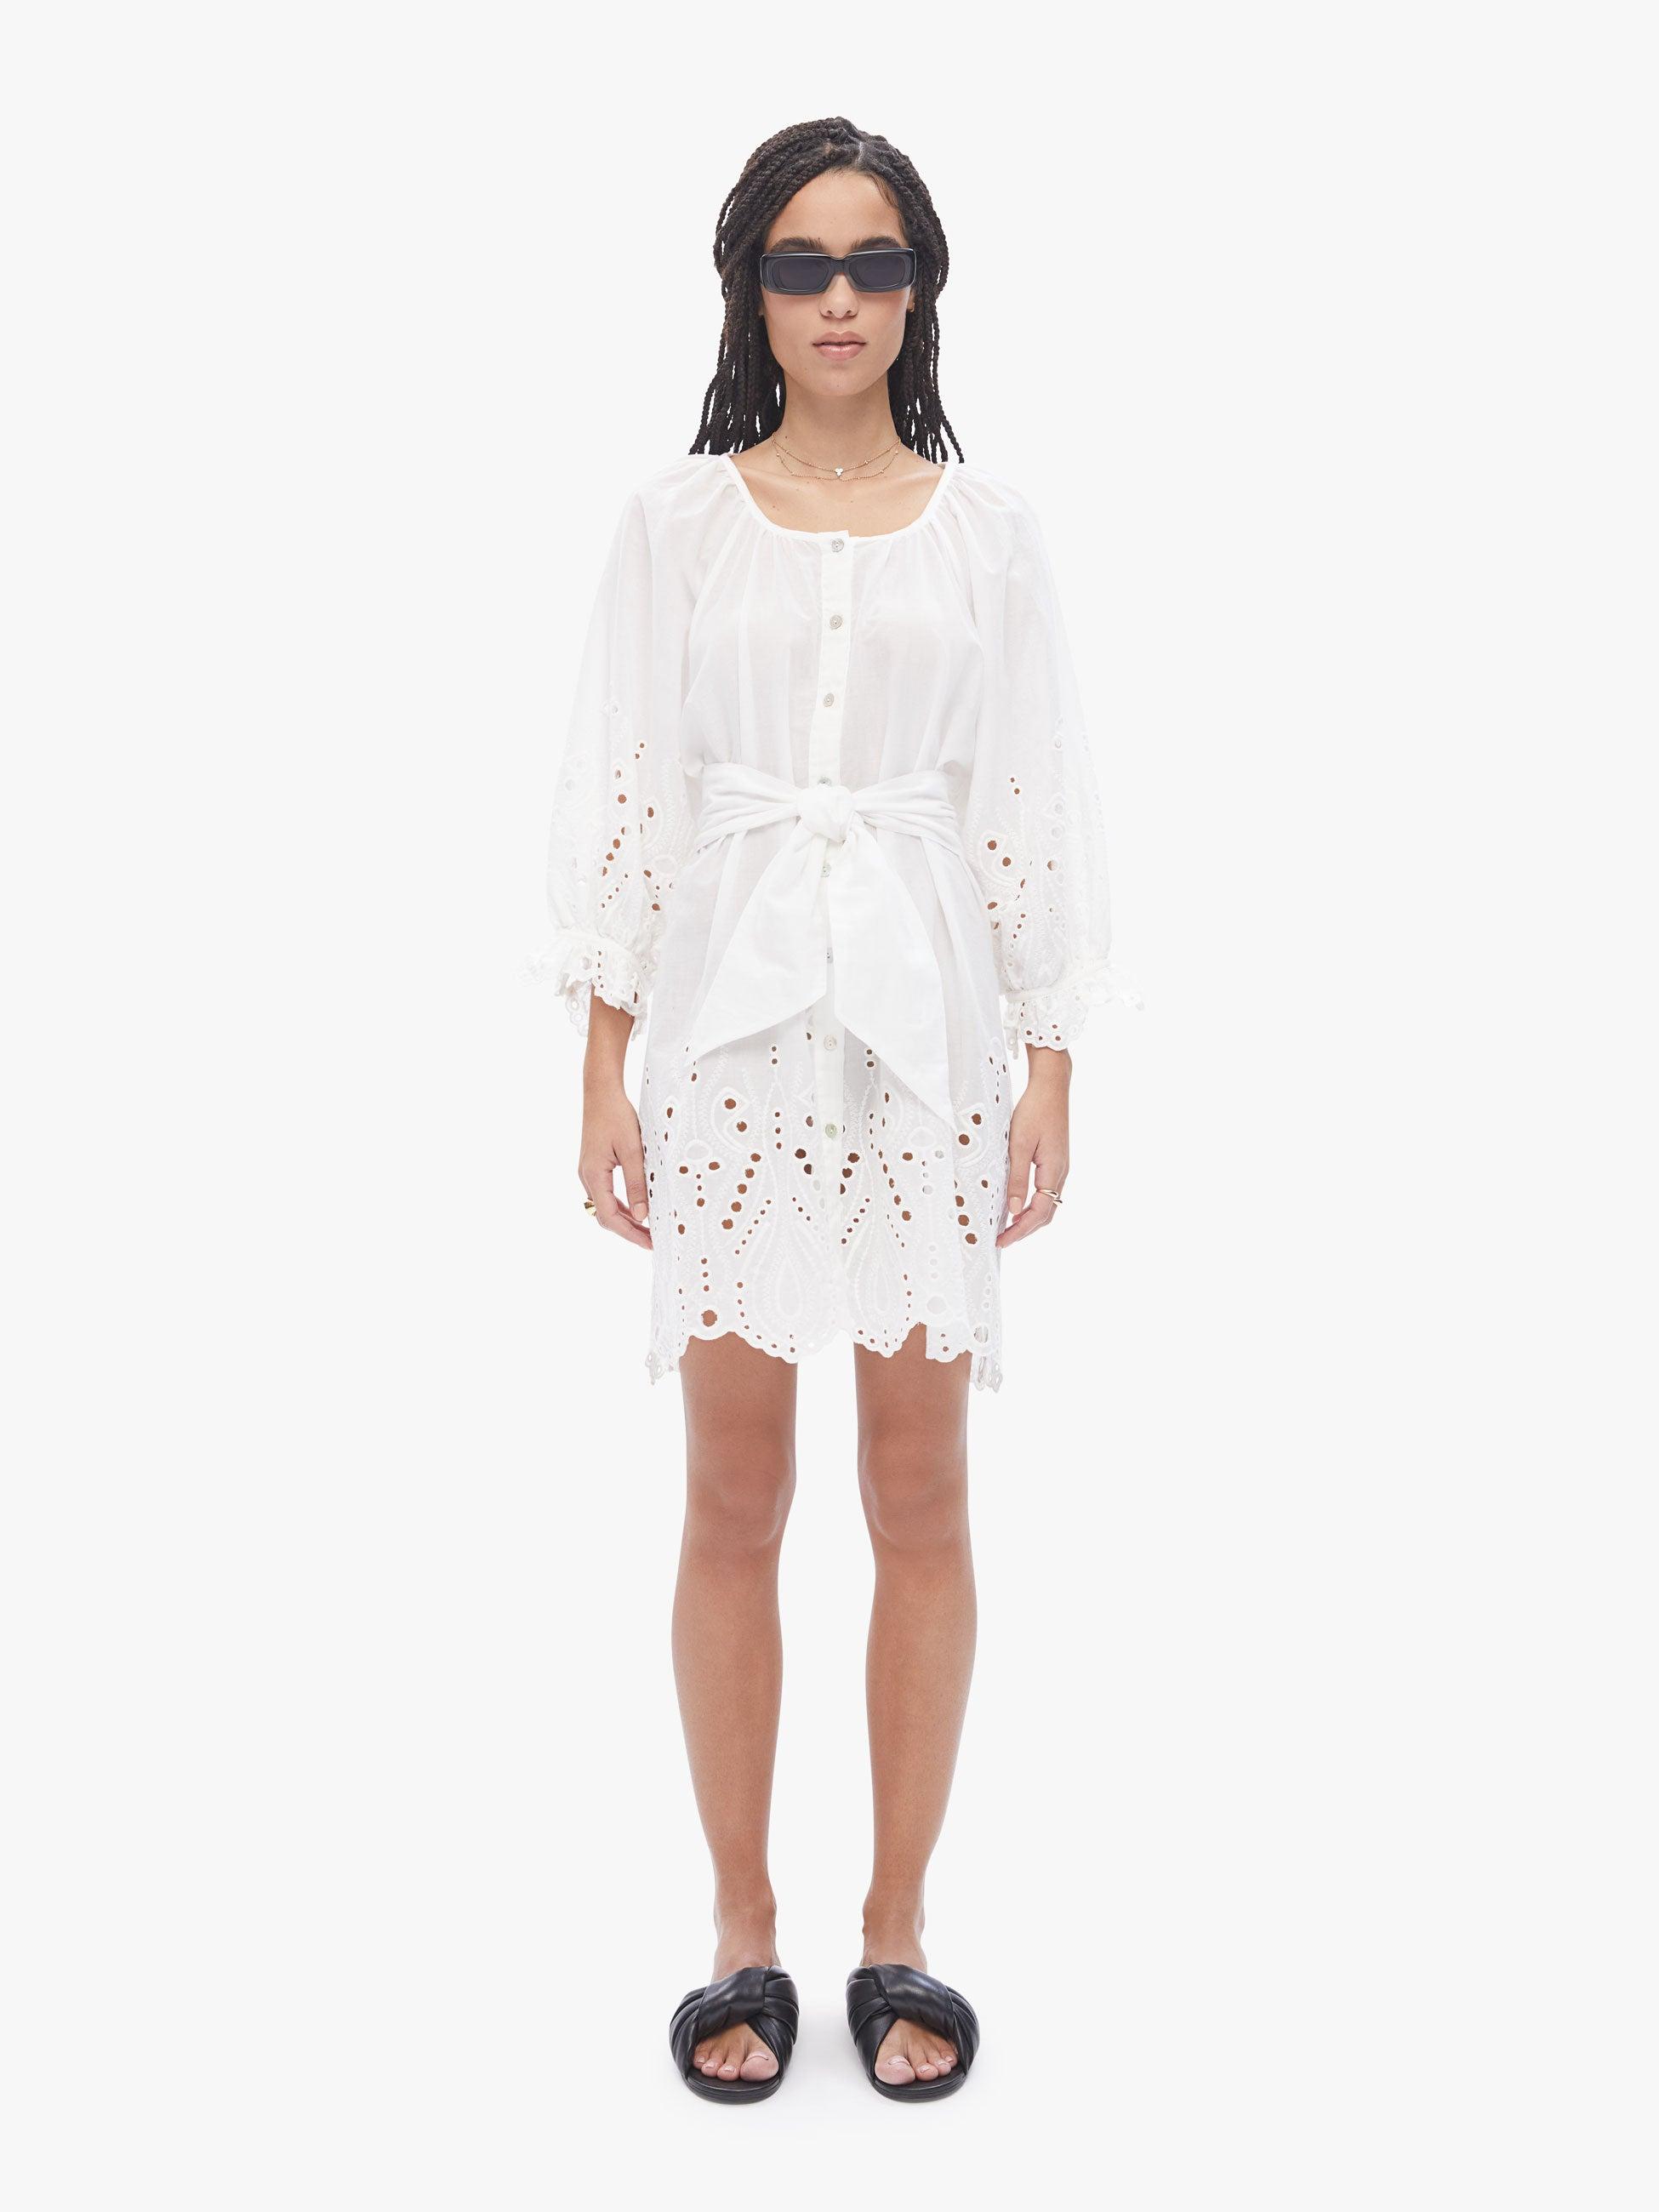 Natalie Martin Alex Short Dress W/ Sash in White | Lyst UK